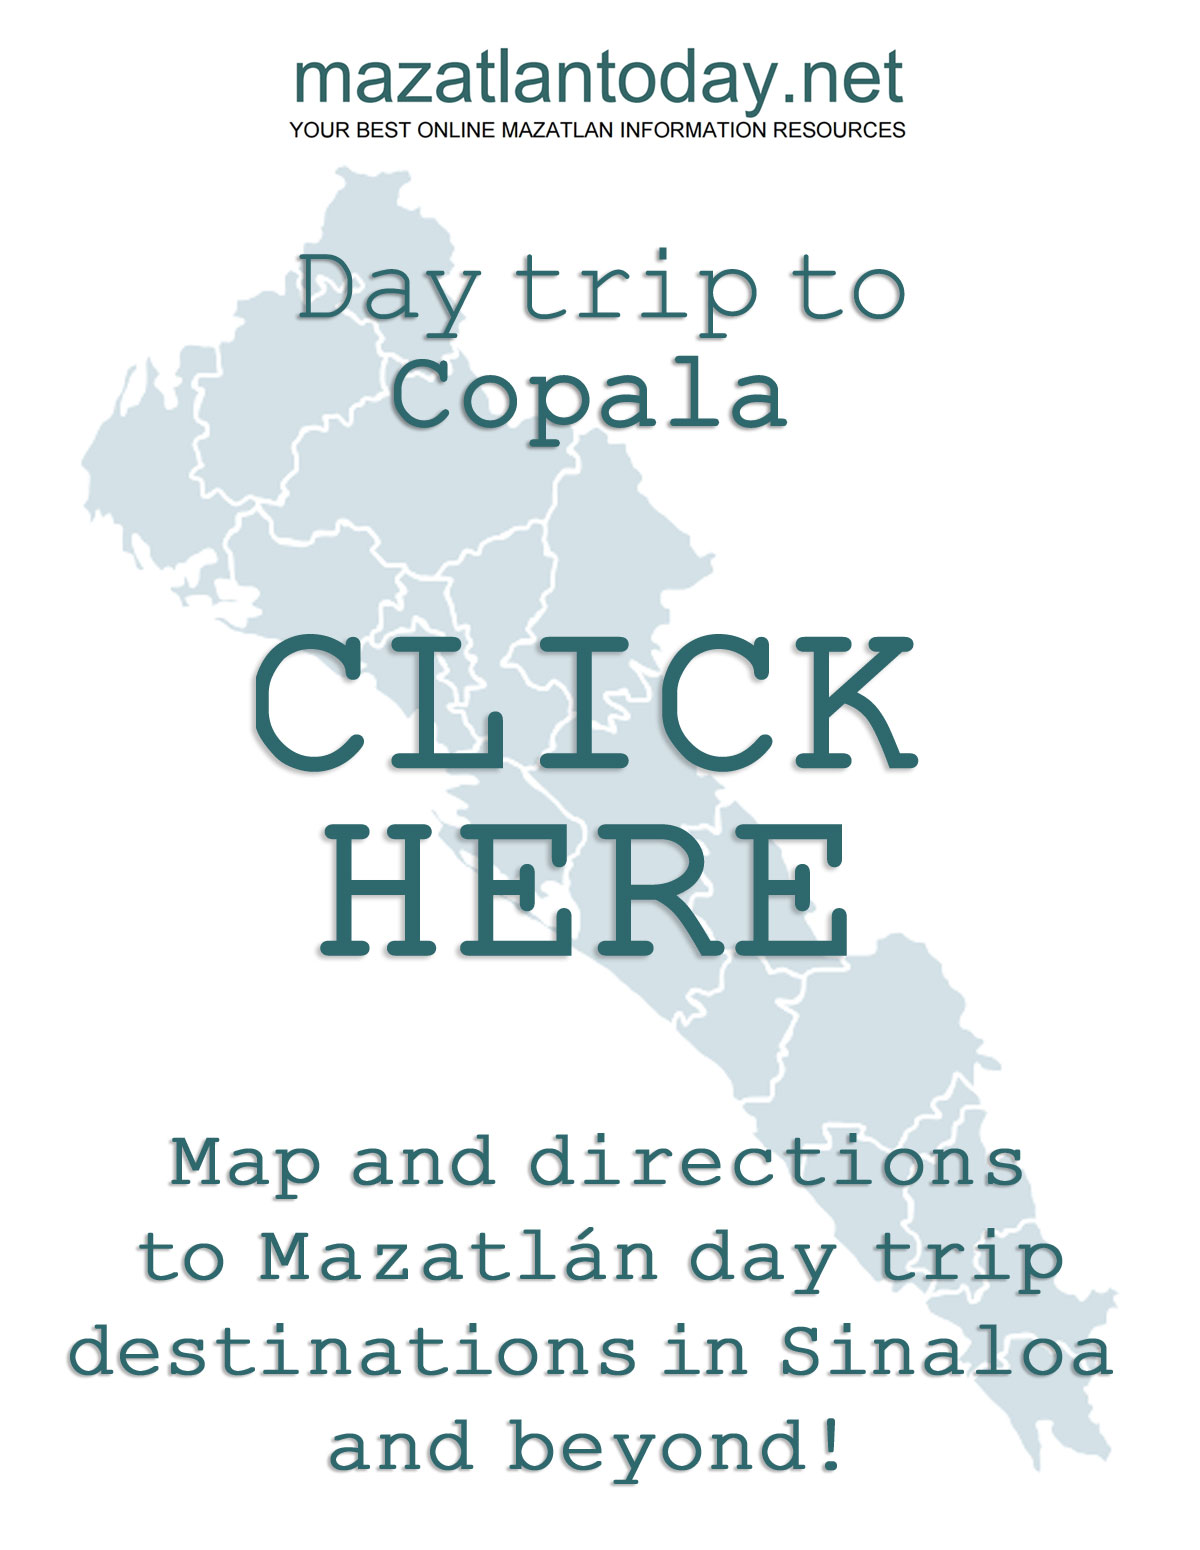 Download free Mazatlan - Copala day trip map and directions